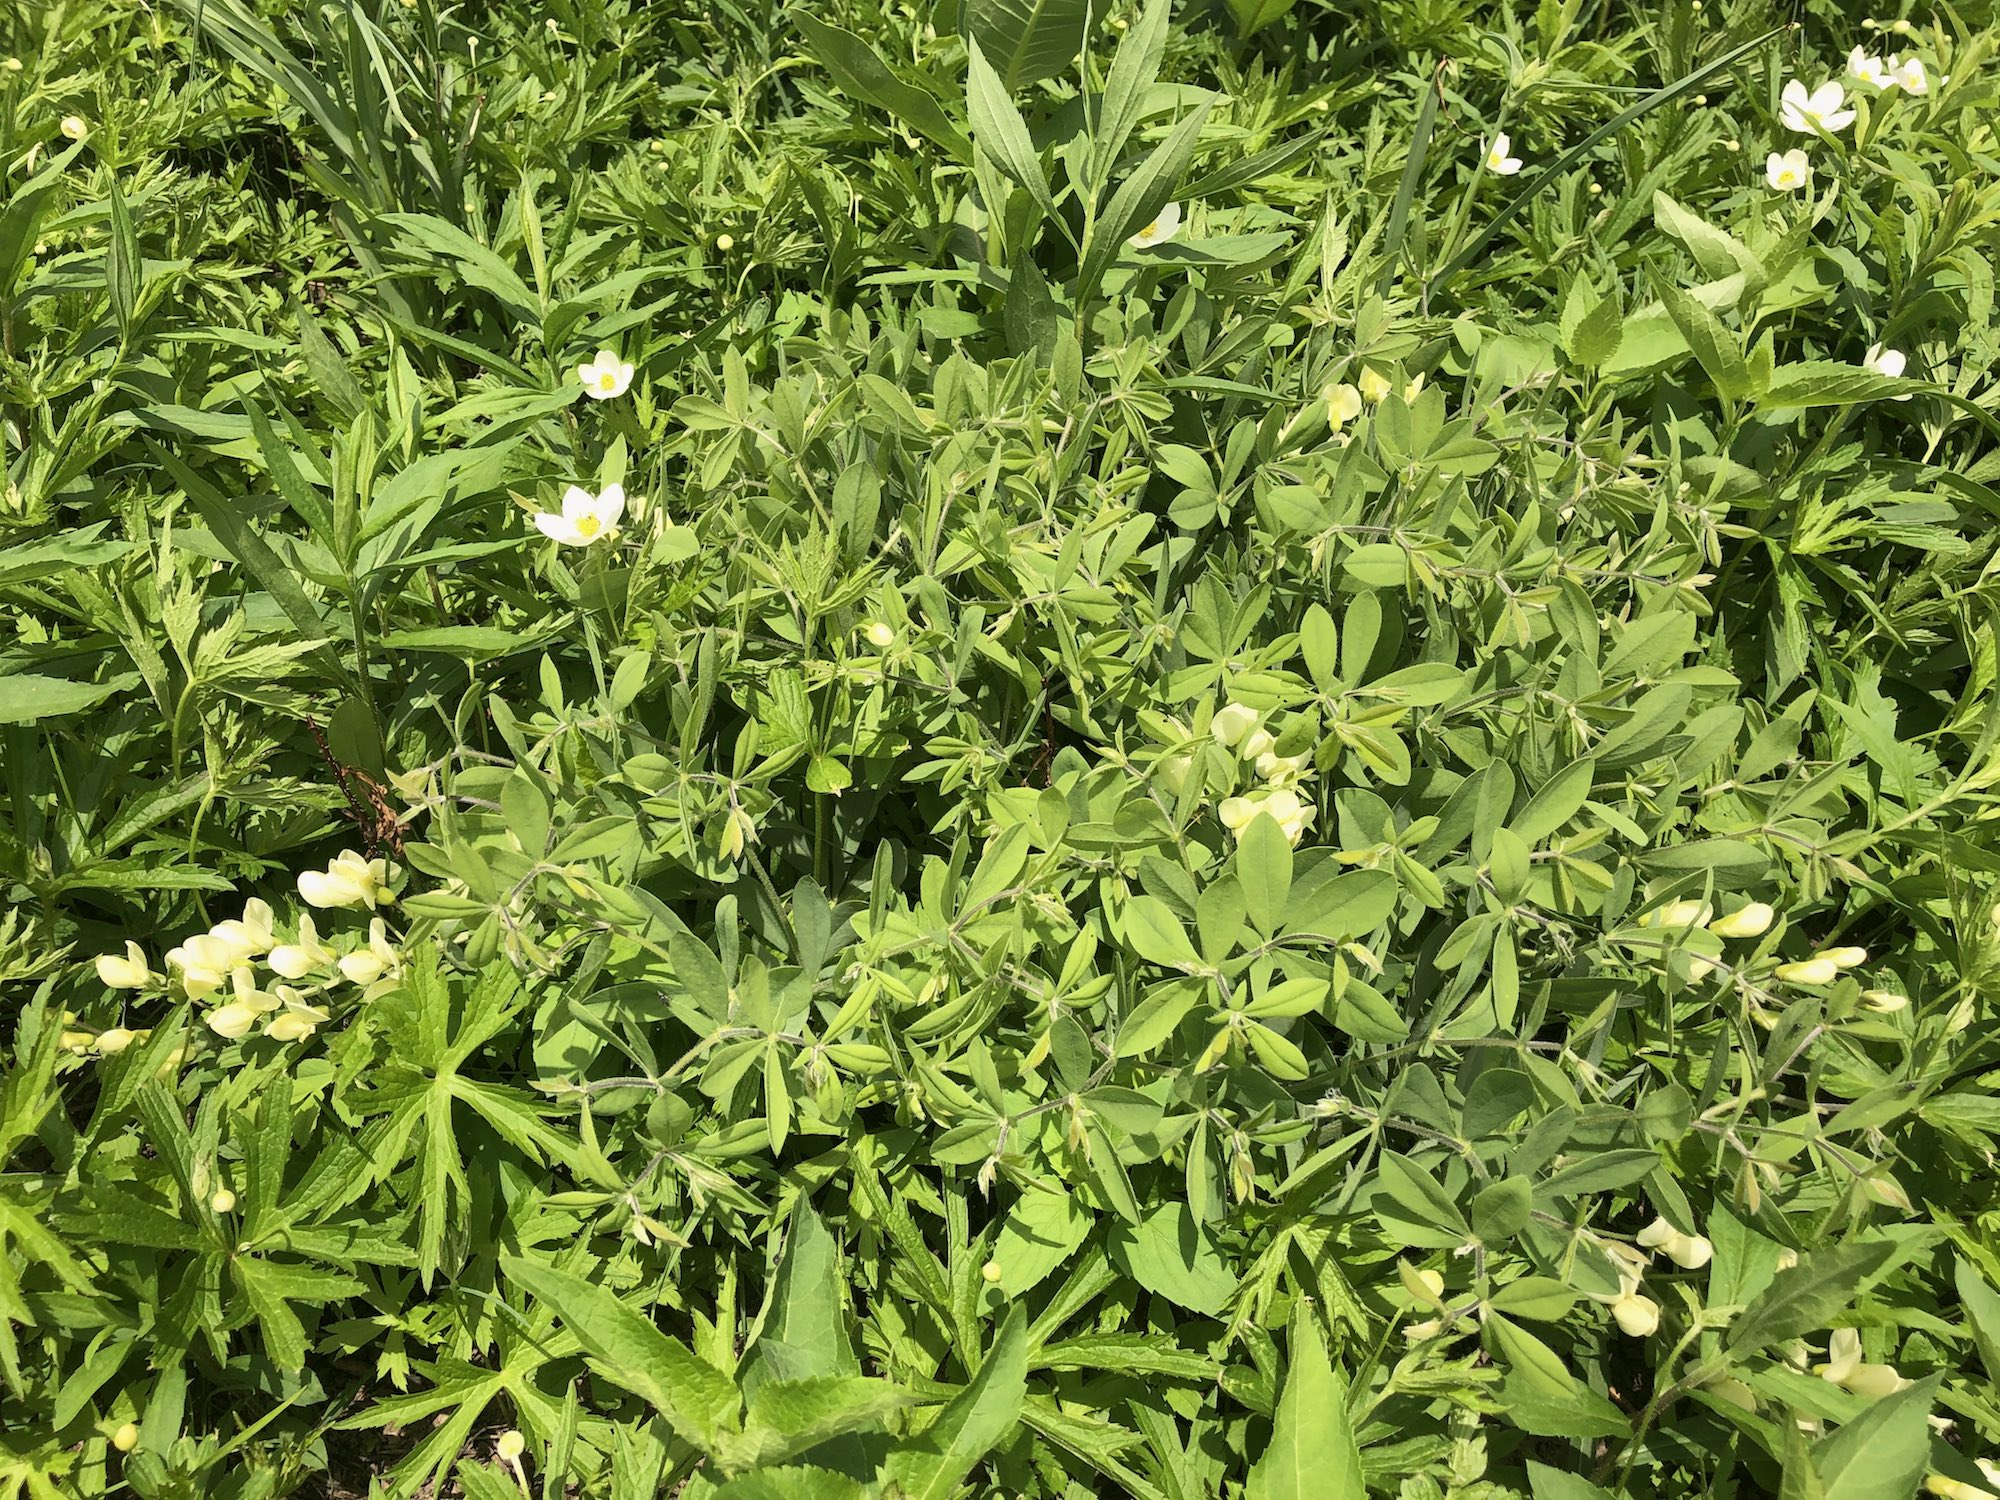 Cream Wild Indigo surrounded by Canada anemone in UW Arboretum in Madison, Wisconsin on May 25, 2021.